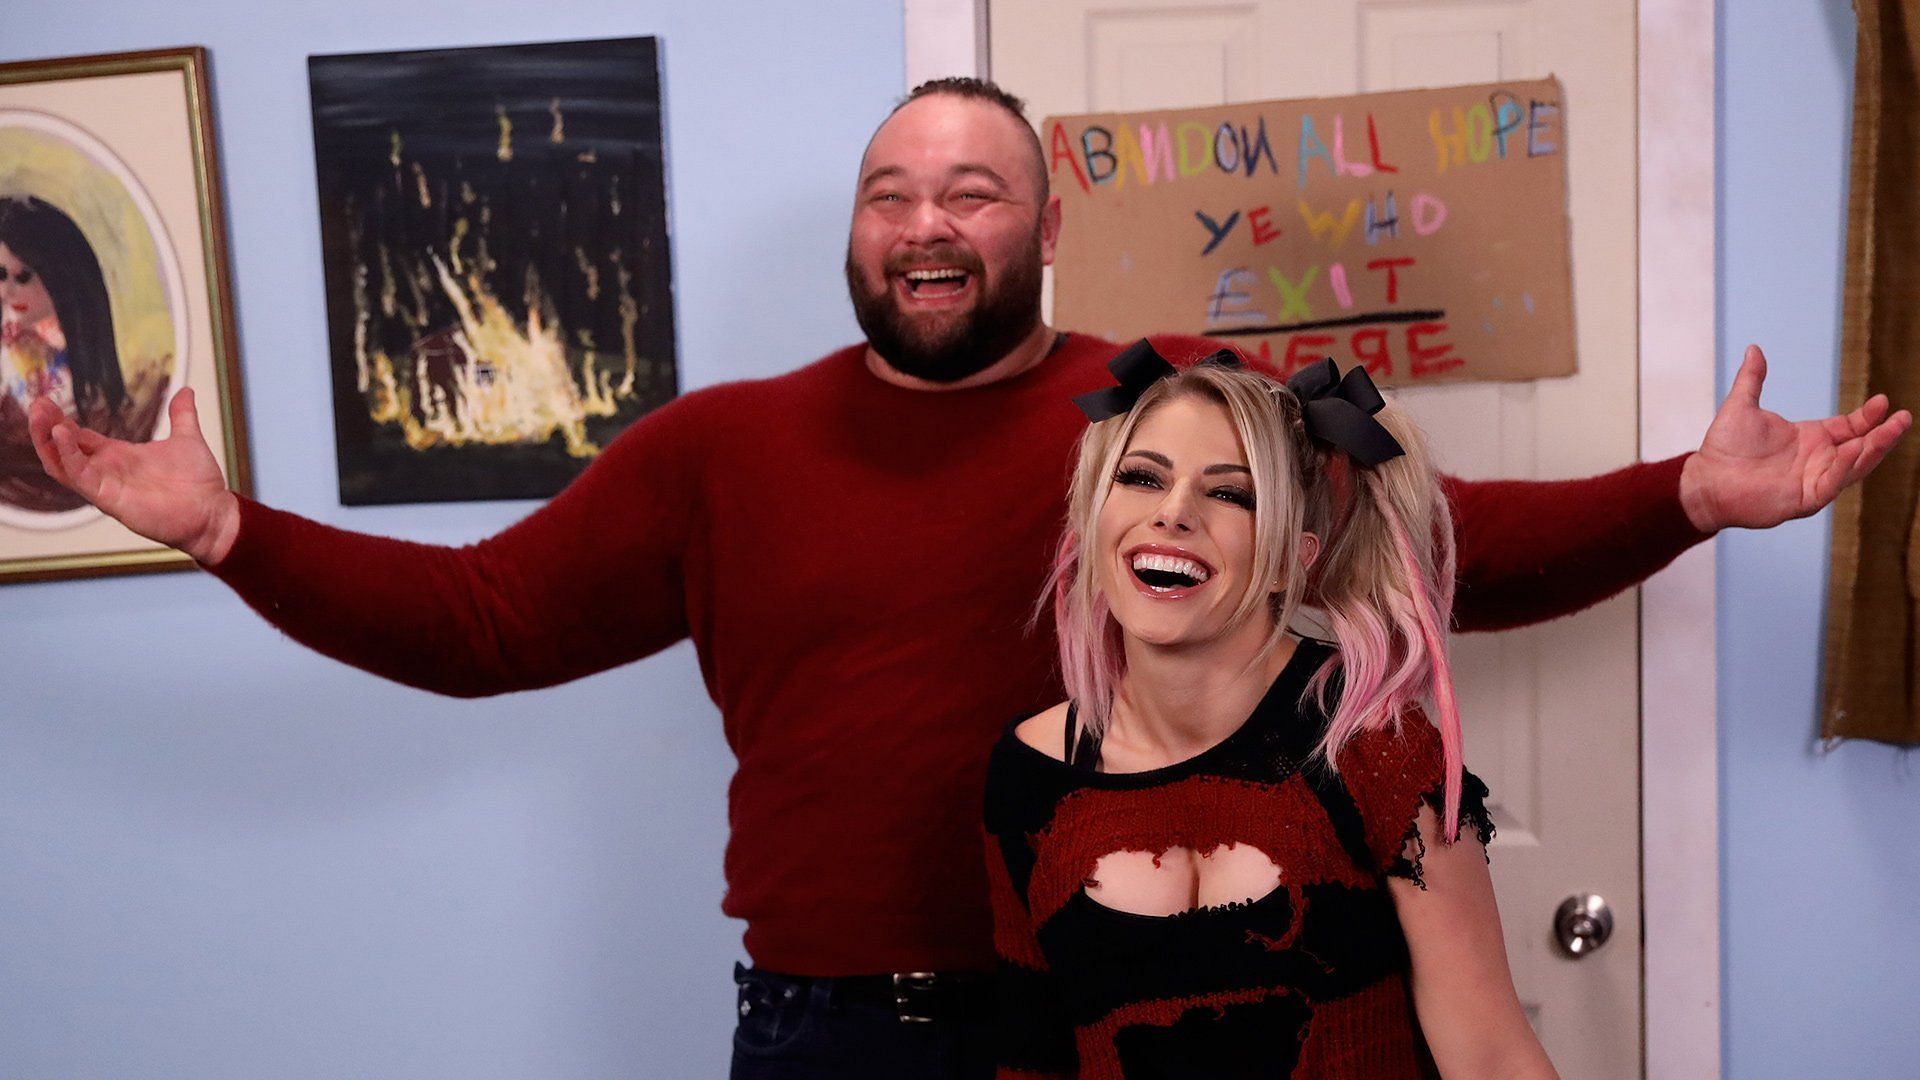 Bray Wyatt and Alexa Bliss